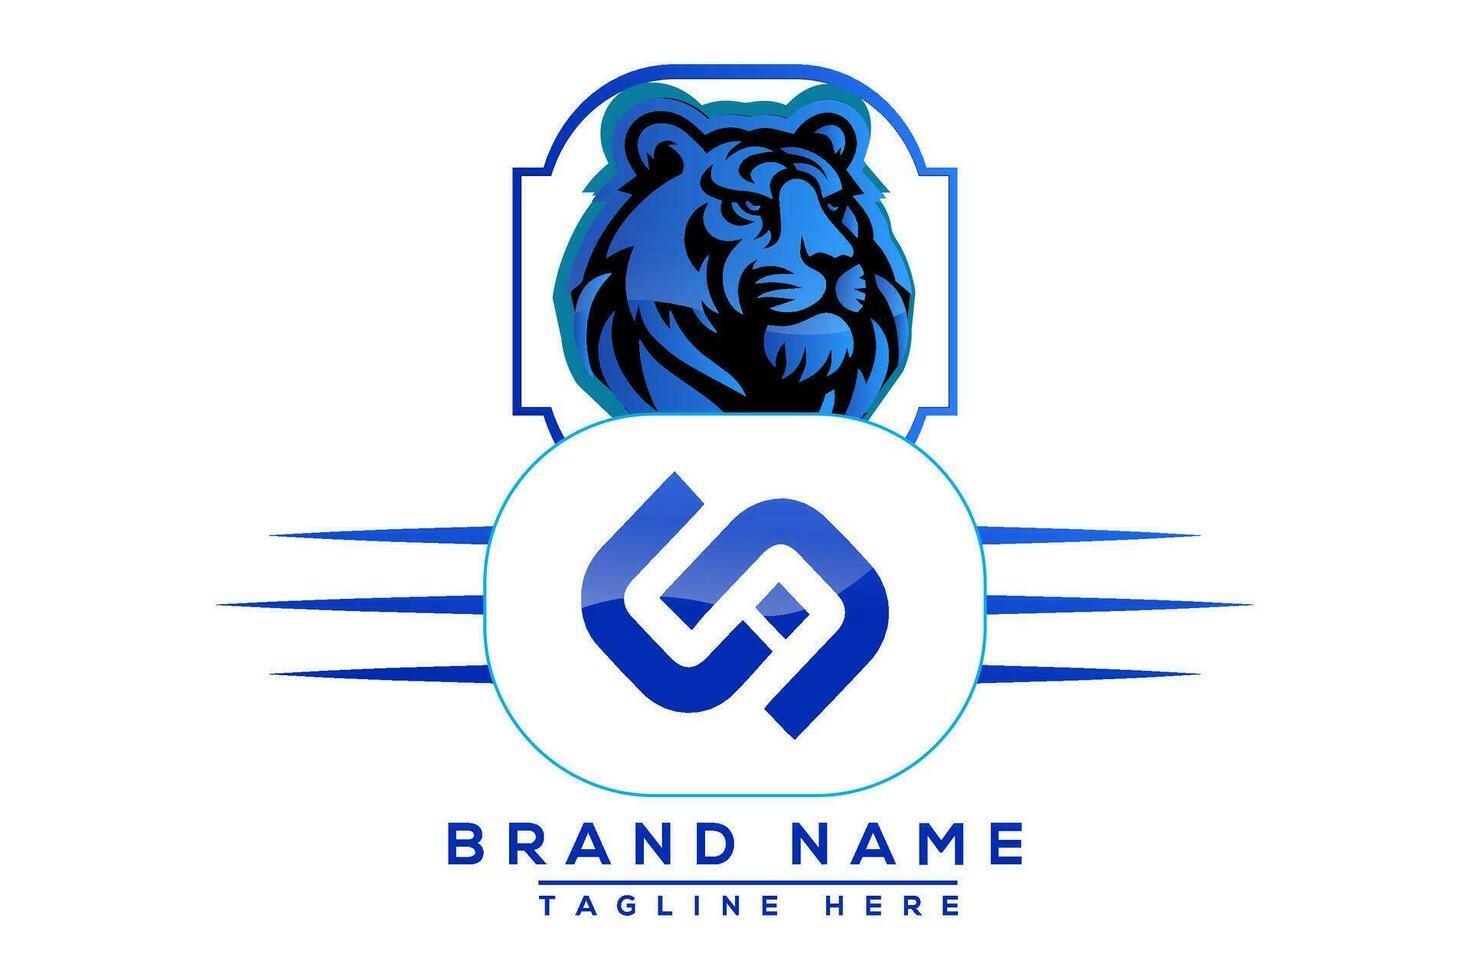 Californie tigre logo bleu conception. vecteur logo conception pour entreprise.